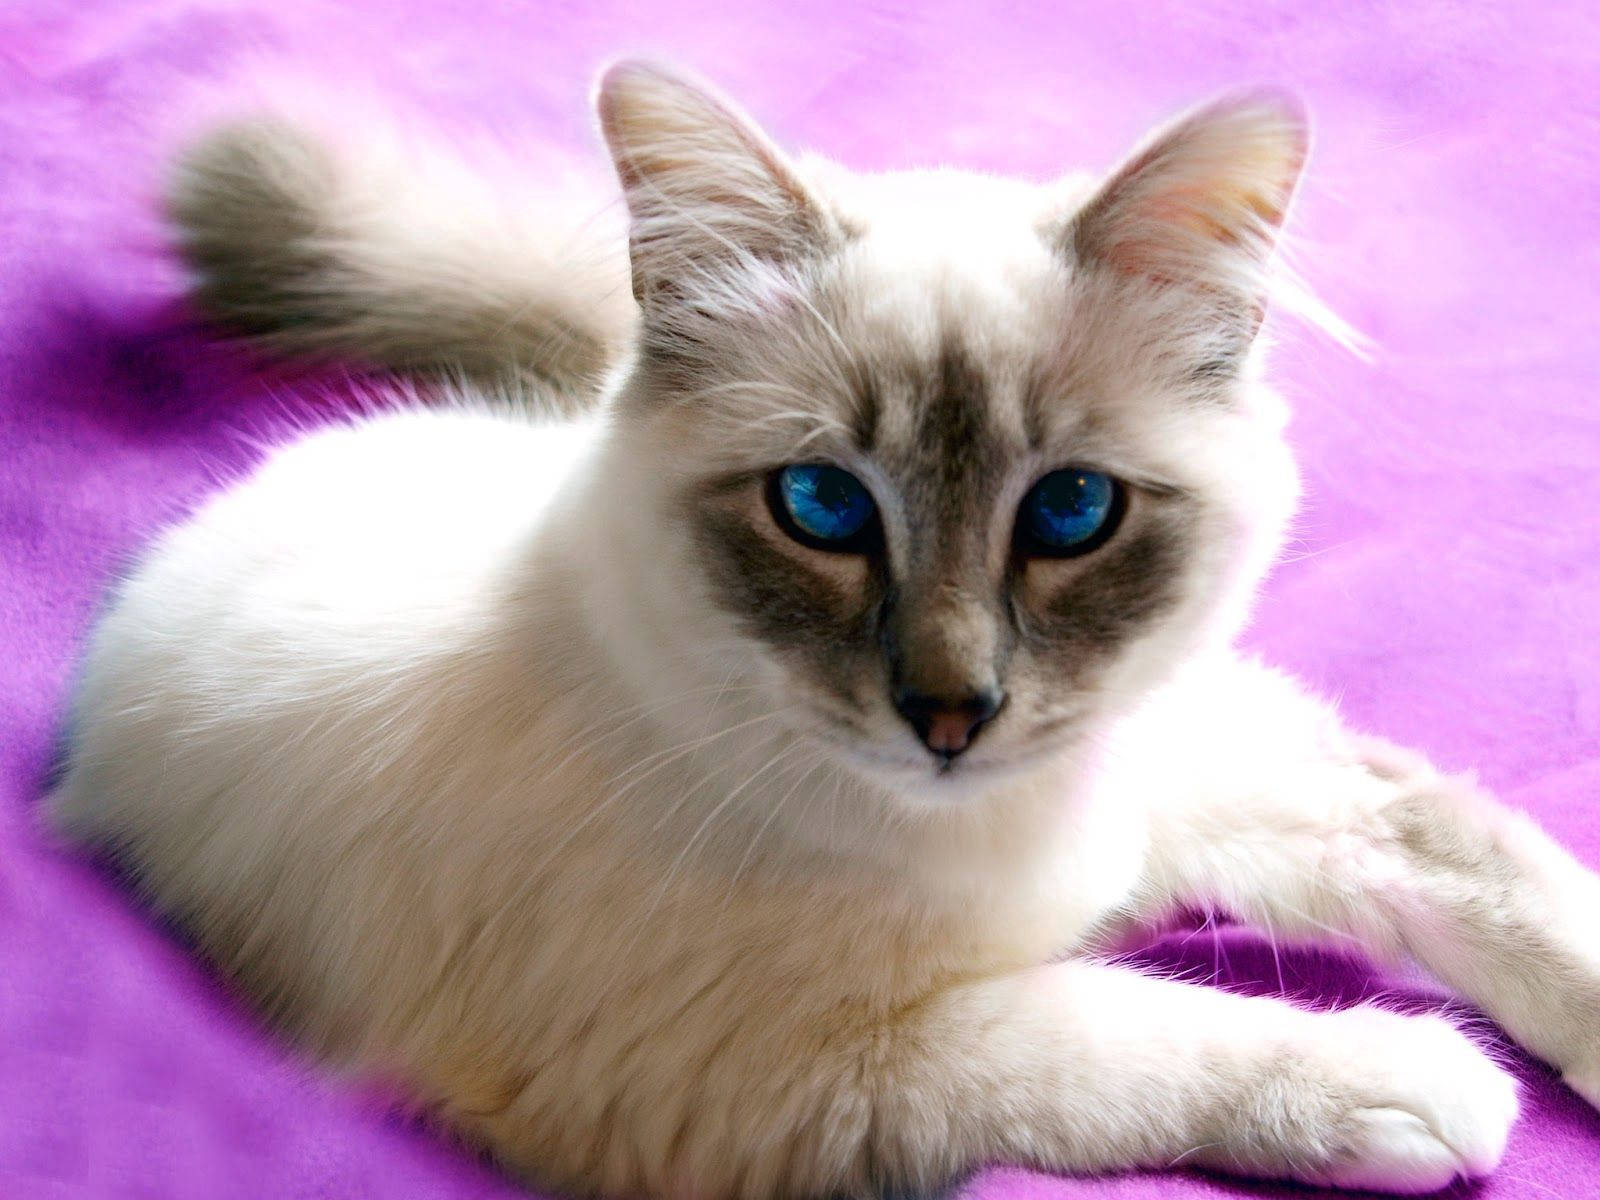 Cat, Cross-eyed, Face, Light Background